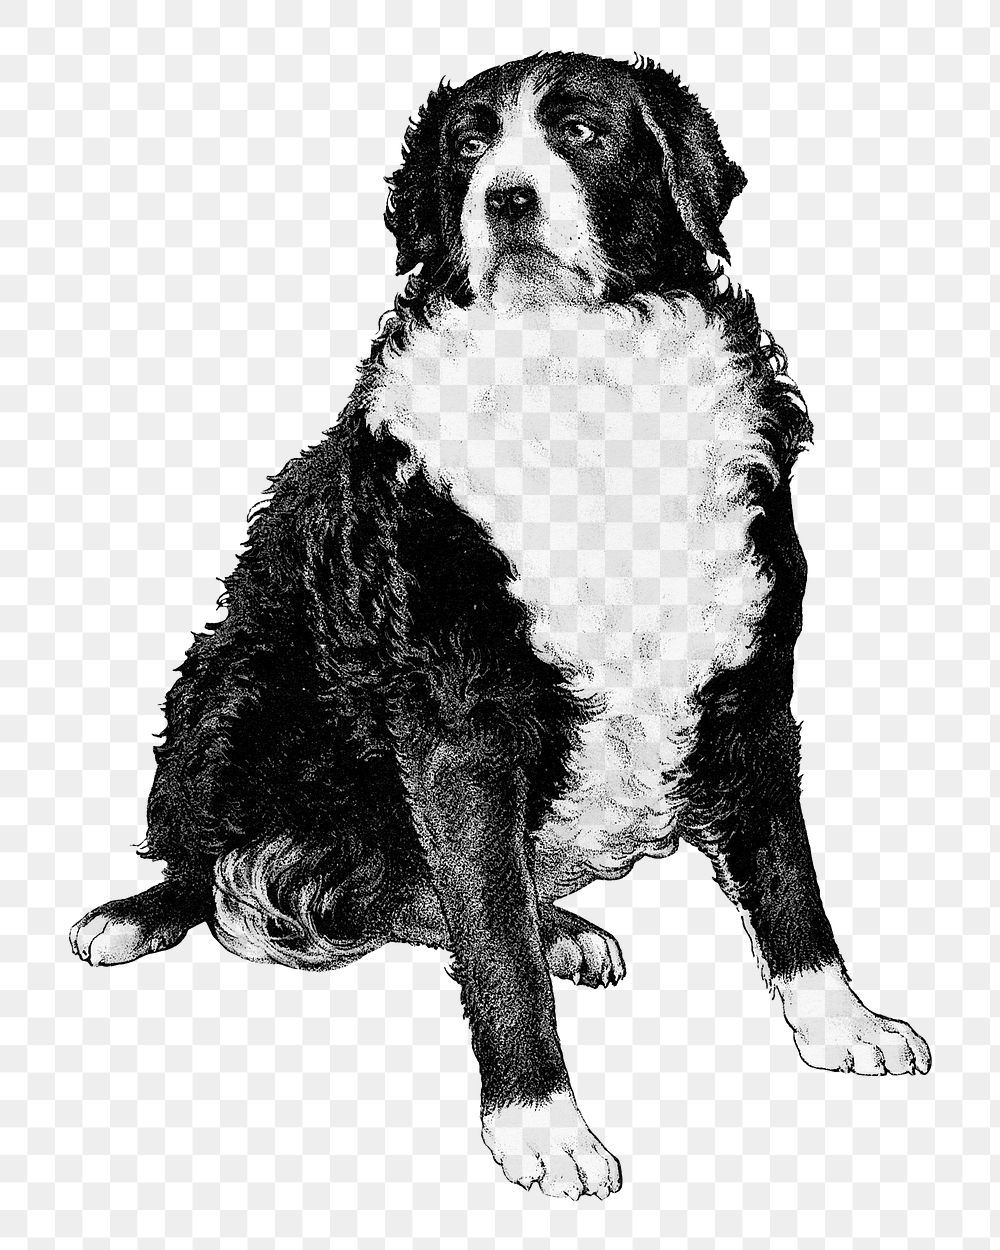 Bernese Mountain dog png, vintage animal illustration, transparent background. Remixed by rawpixel.